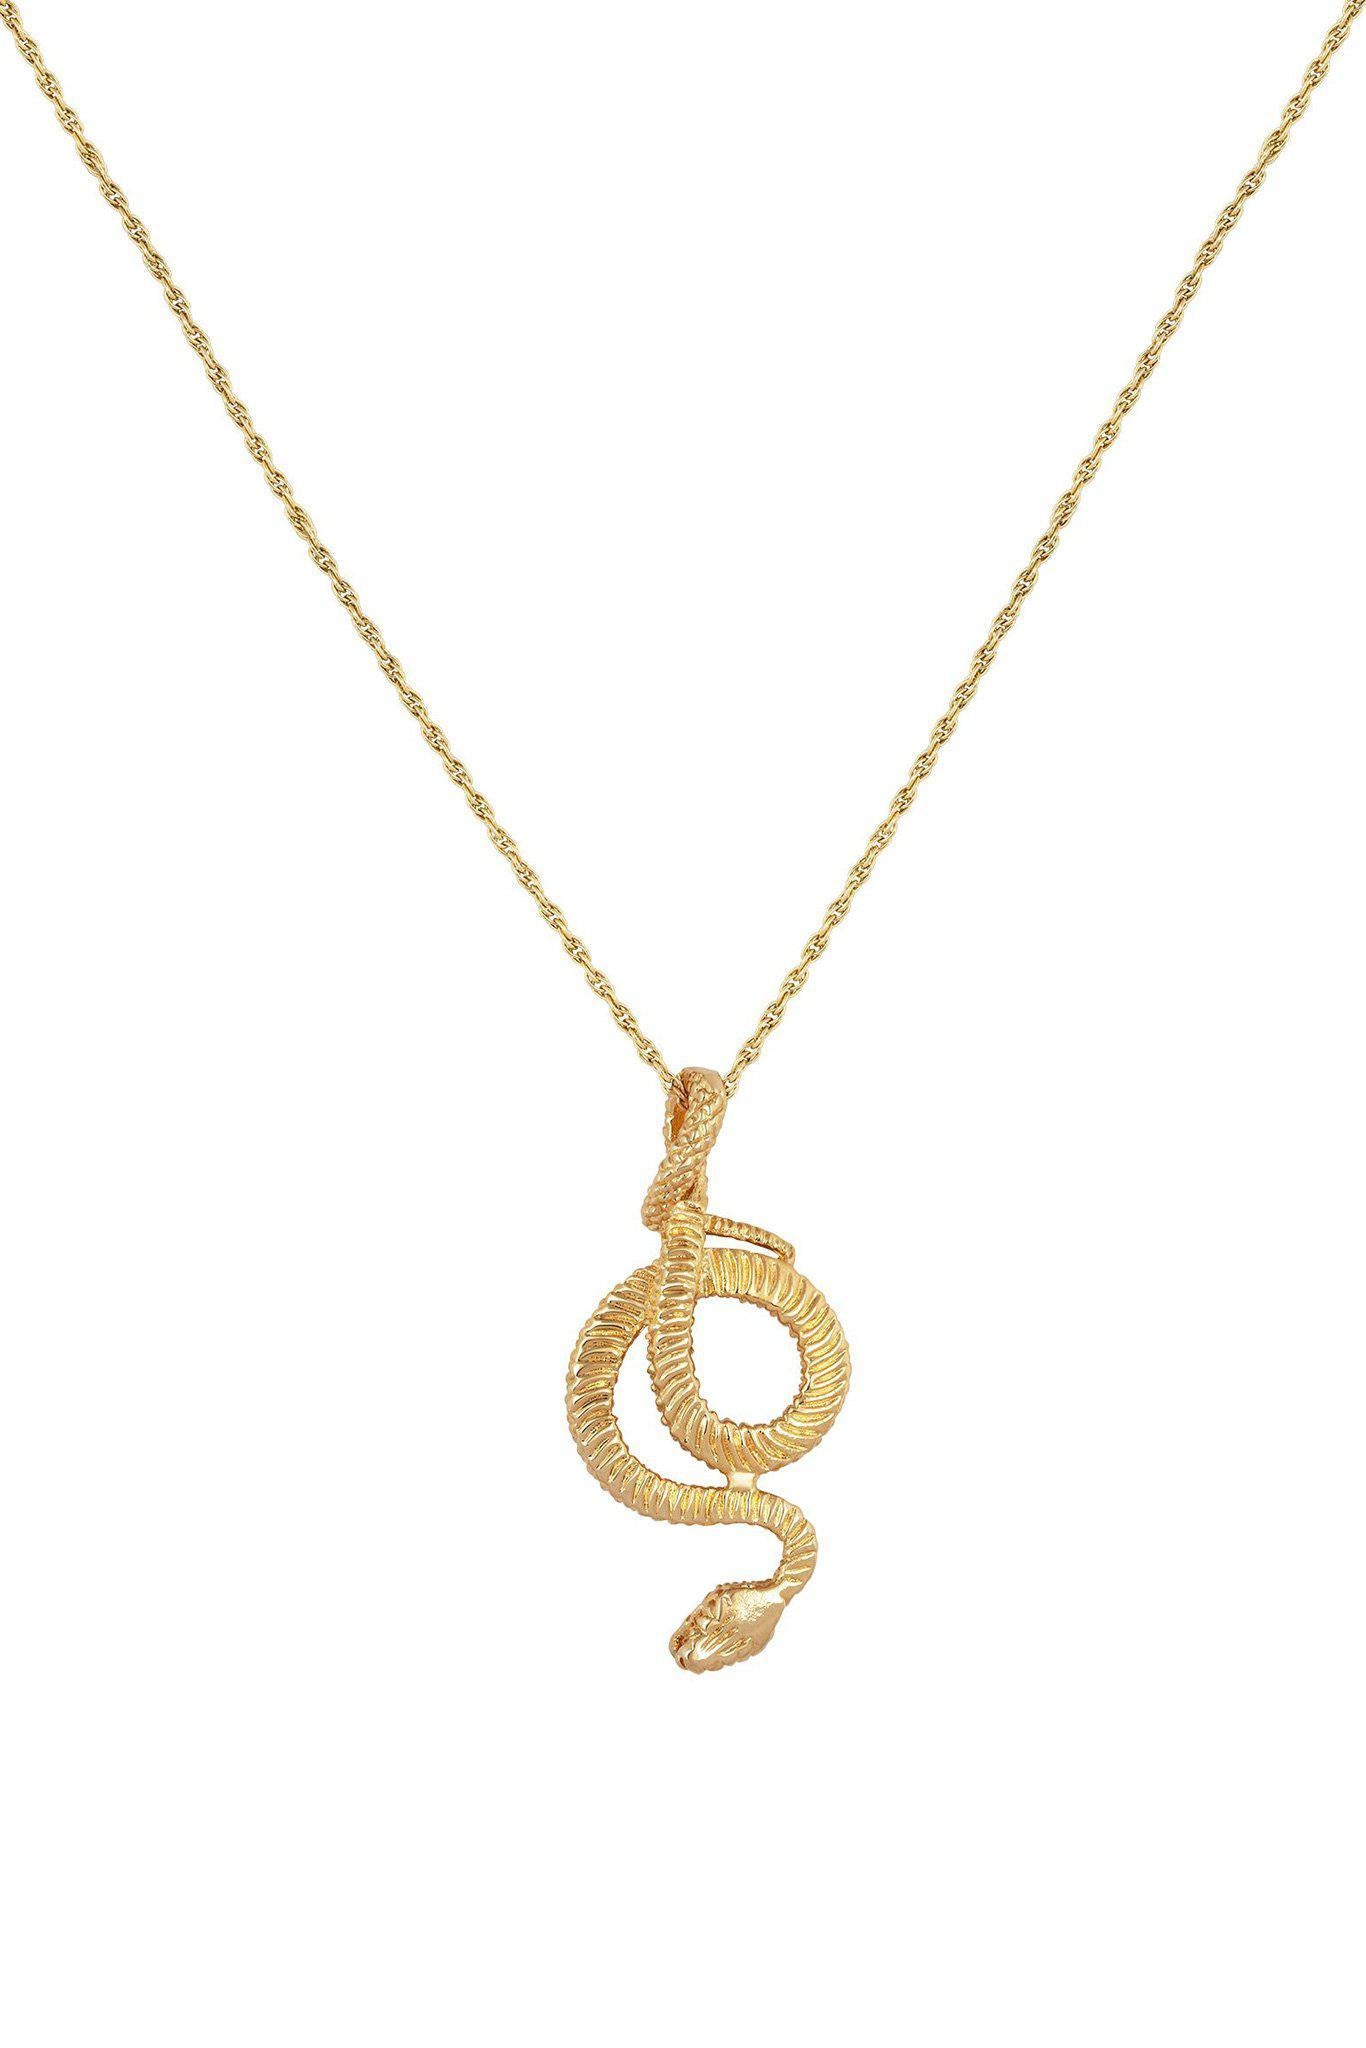 Snake Charmer necklace on white background